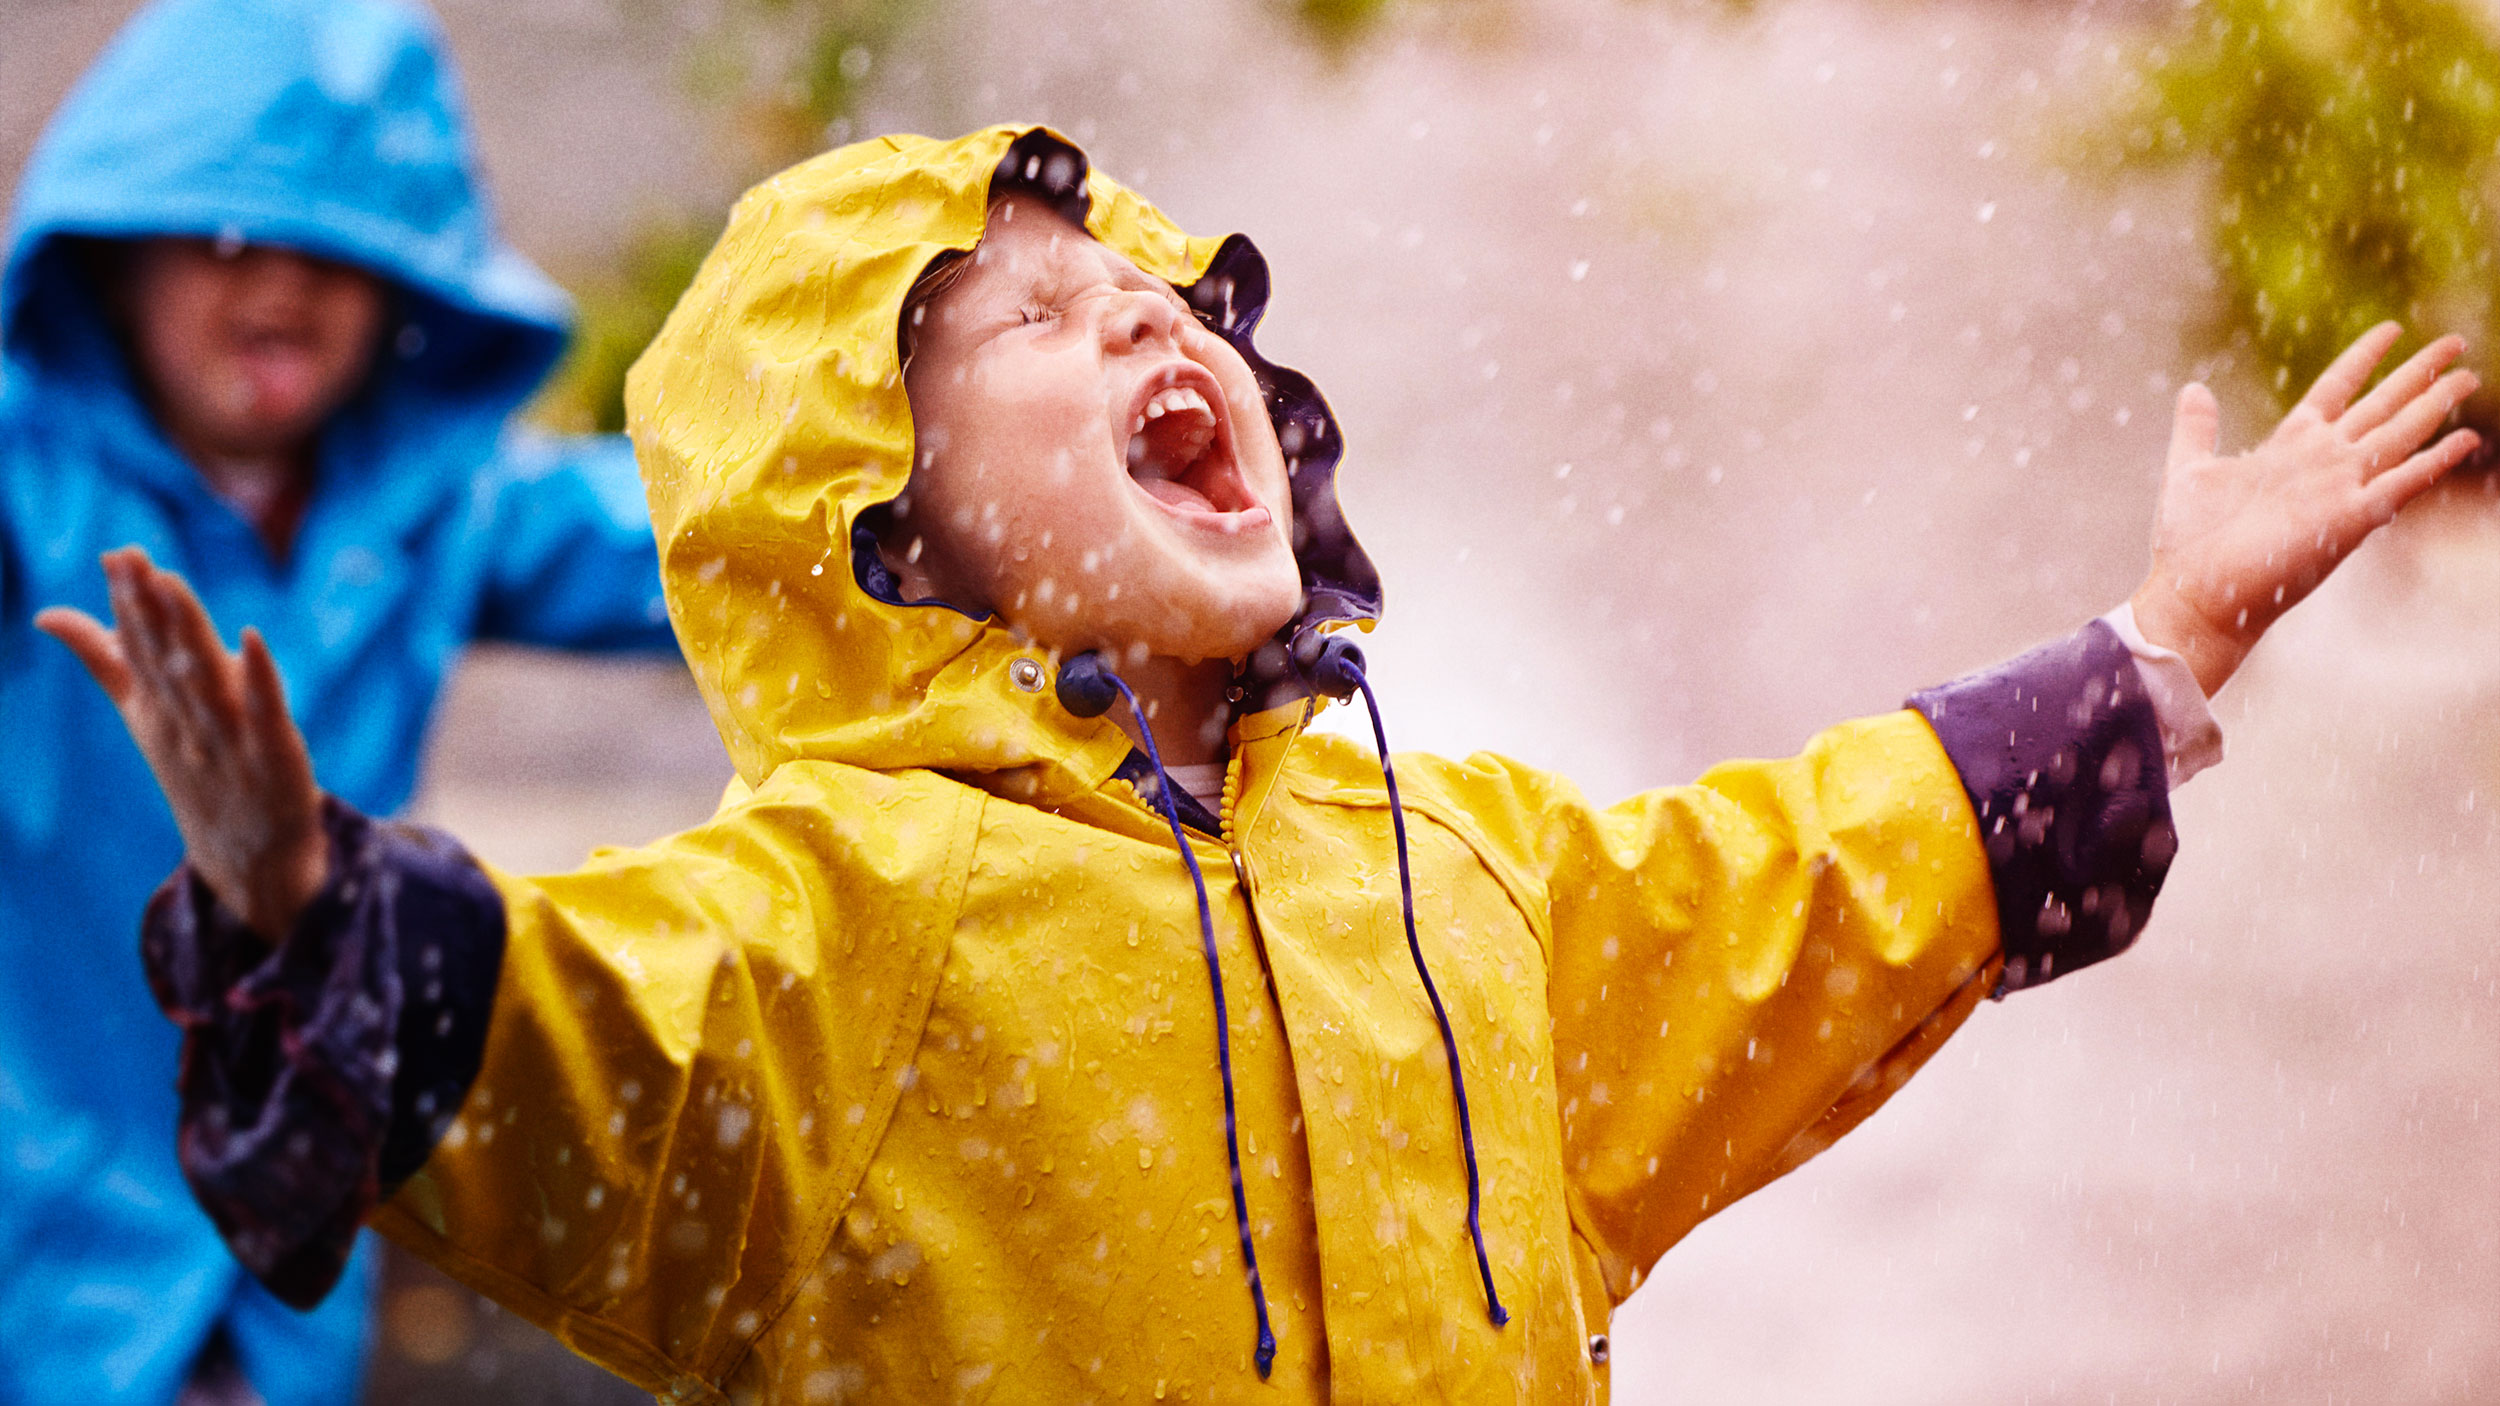 Child playing in rain